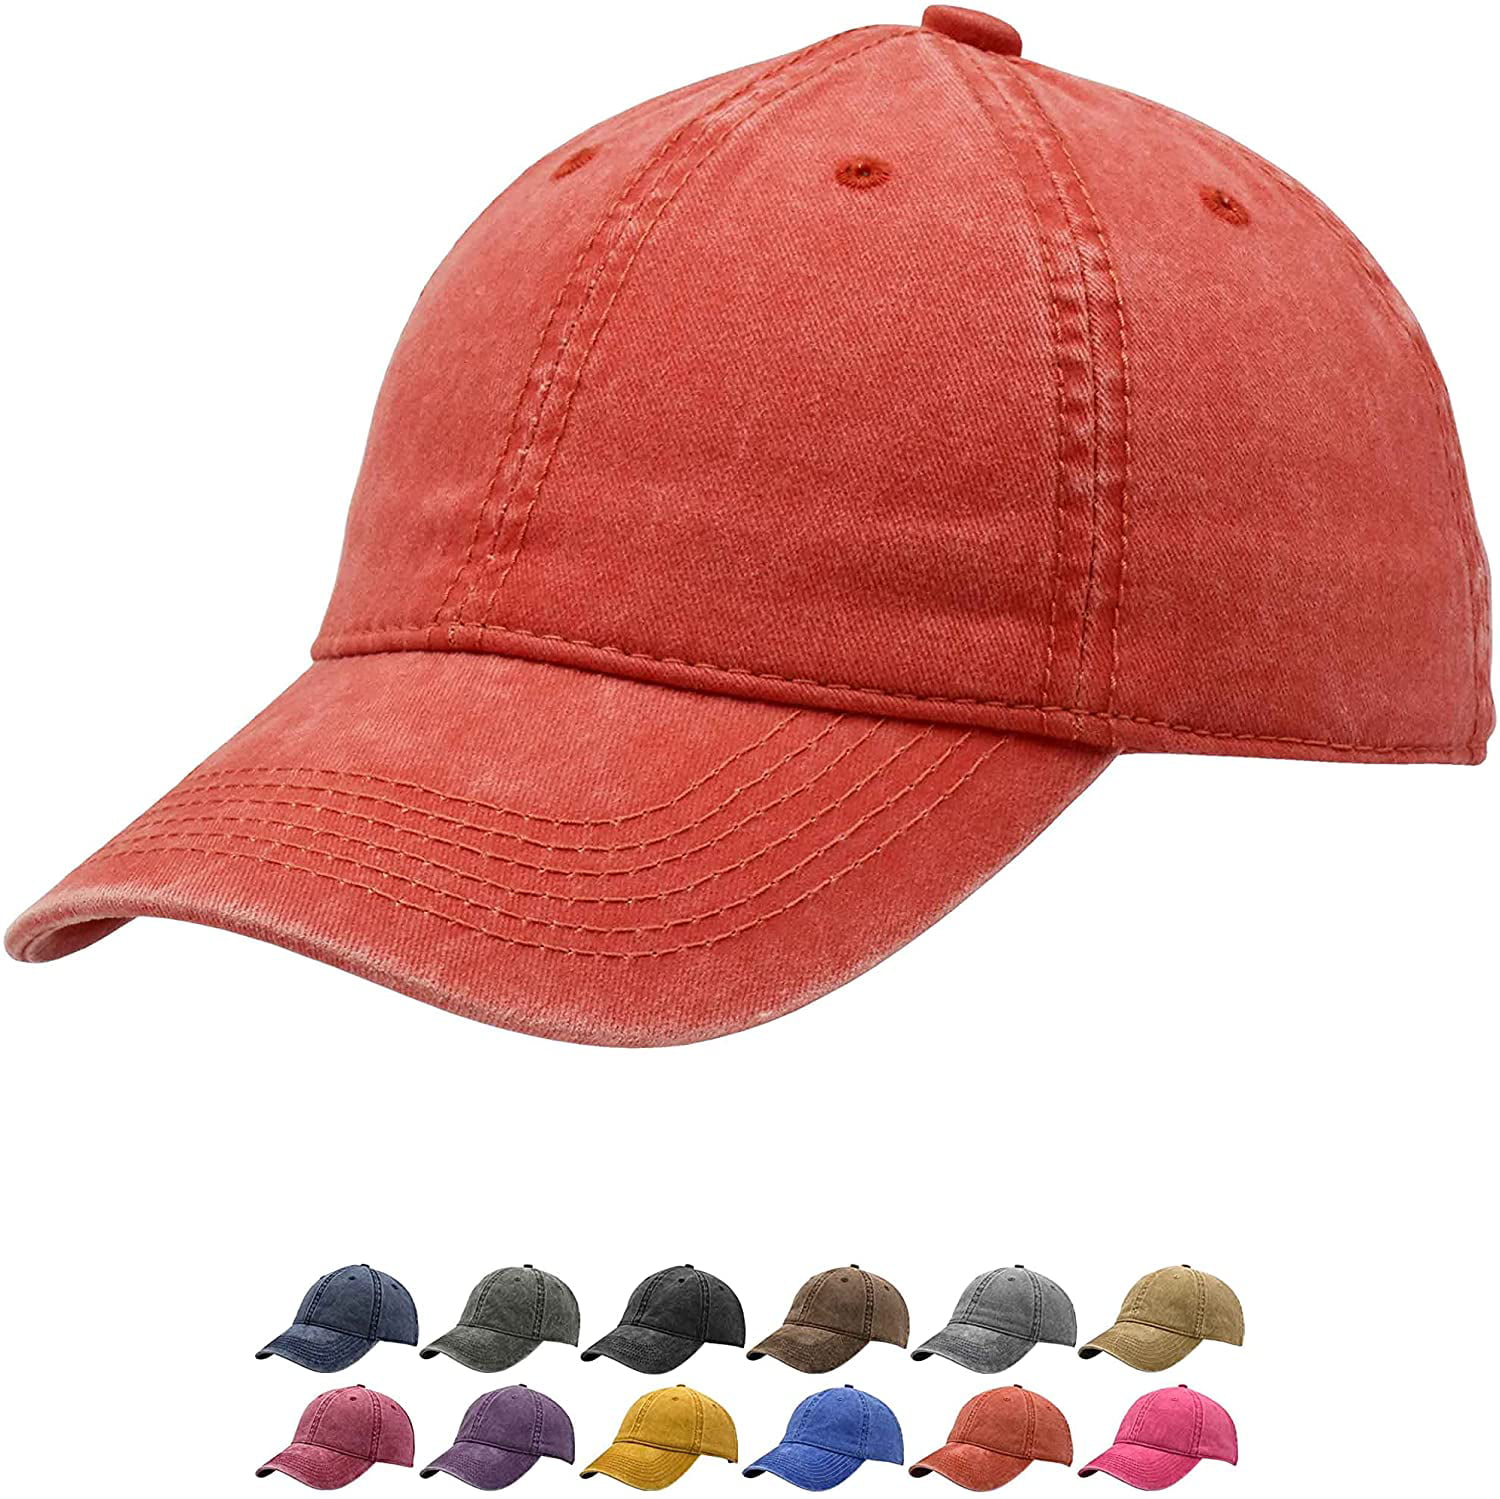 Baseball Cap Washed Distressed Cap Plain Hat Brushed Cotton Vintage Hats Unisex